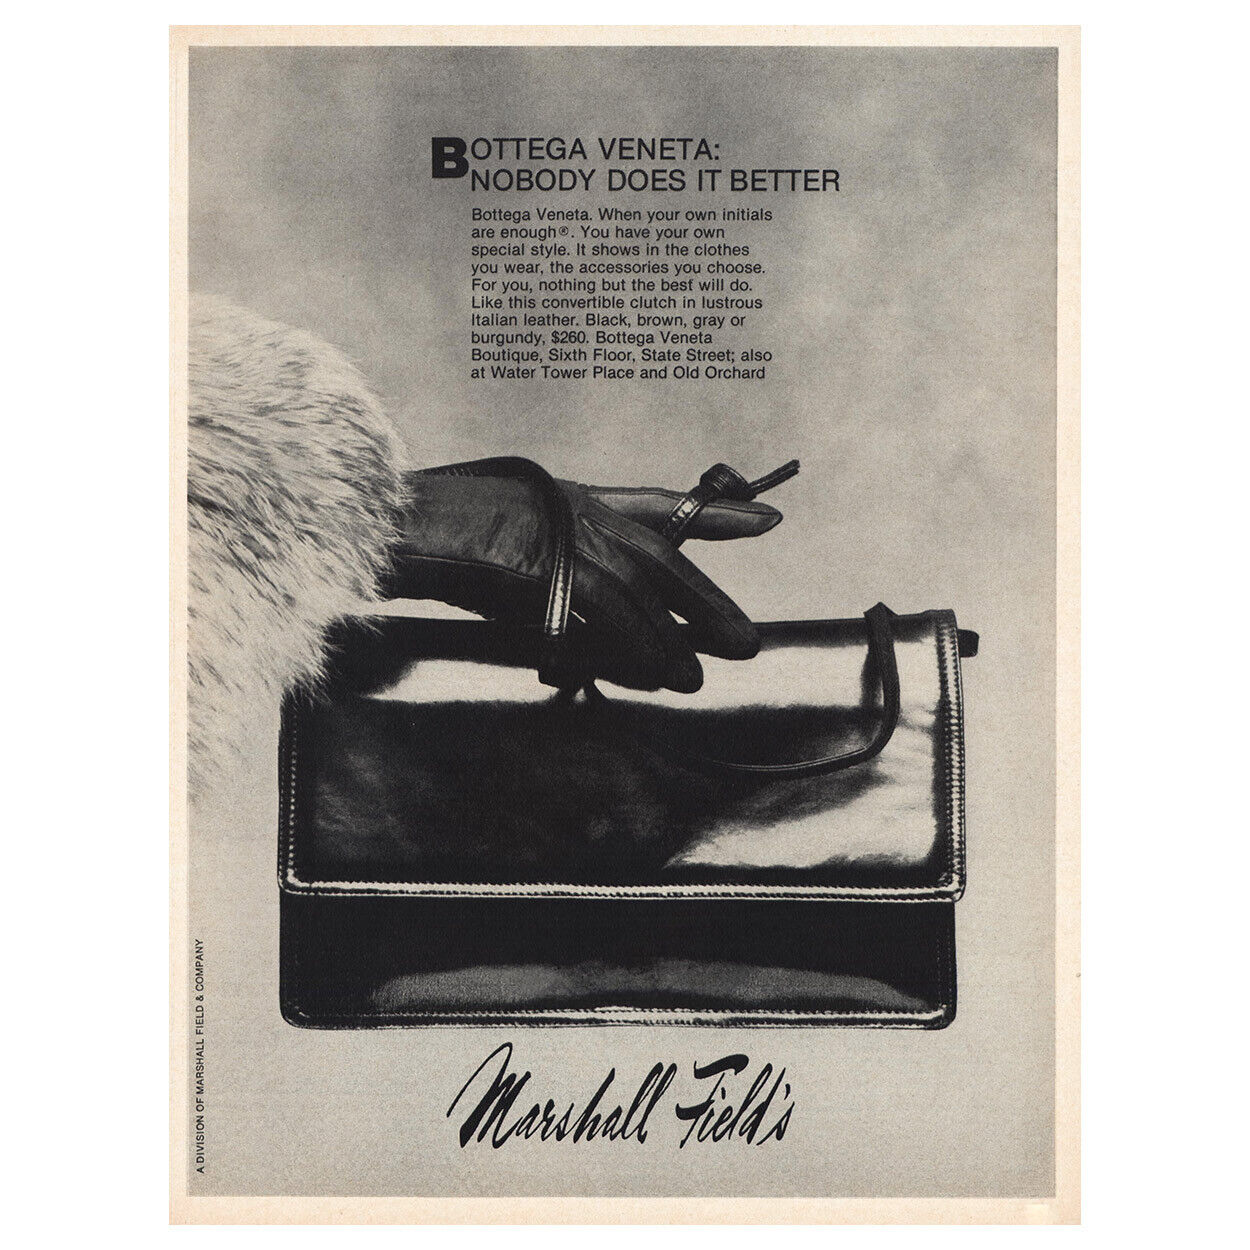 1980 Bottega Veneta: Nobody Does It Better Vintage Print Ad